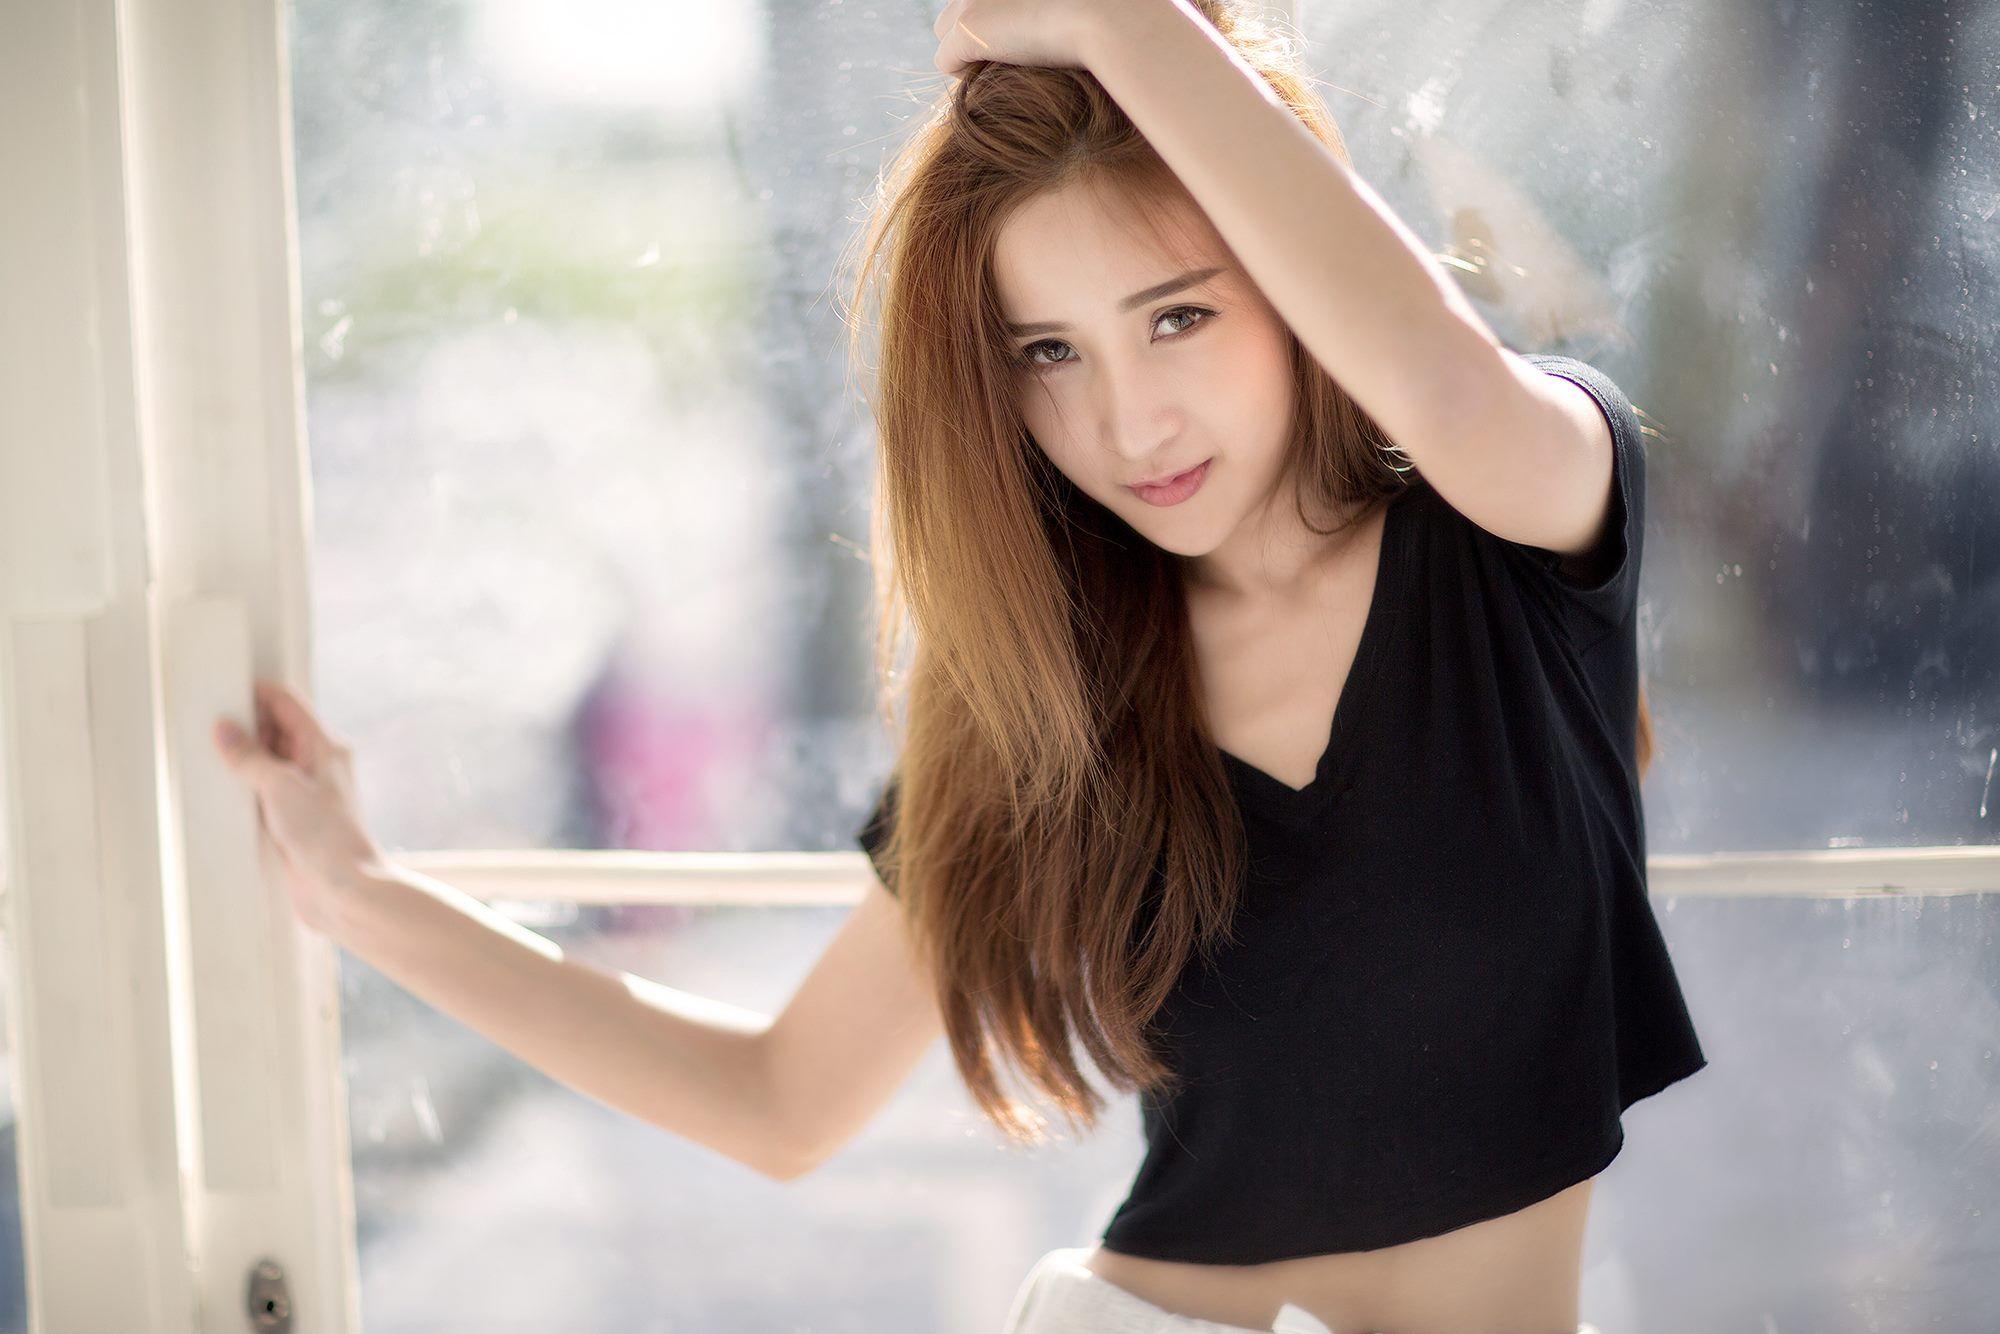 Asian Girl Wallpapers - Top Free Asian Girl Backgrounds - WallpaperAccess